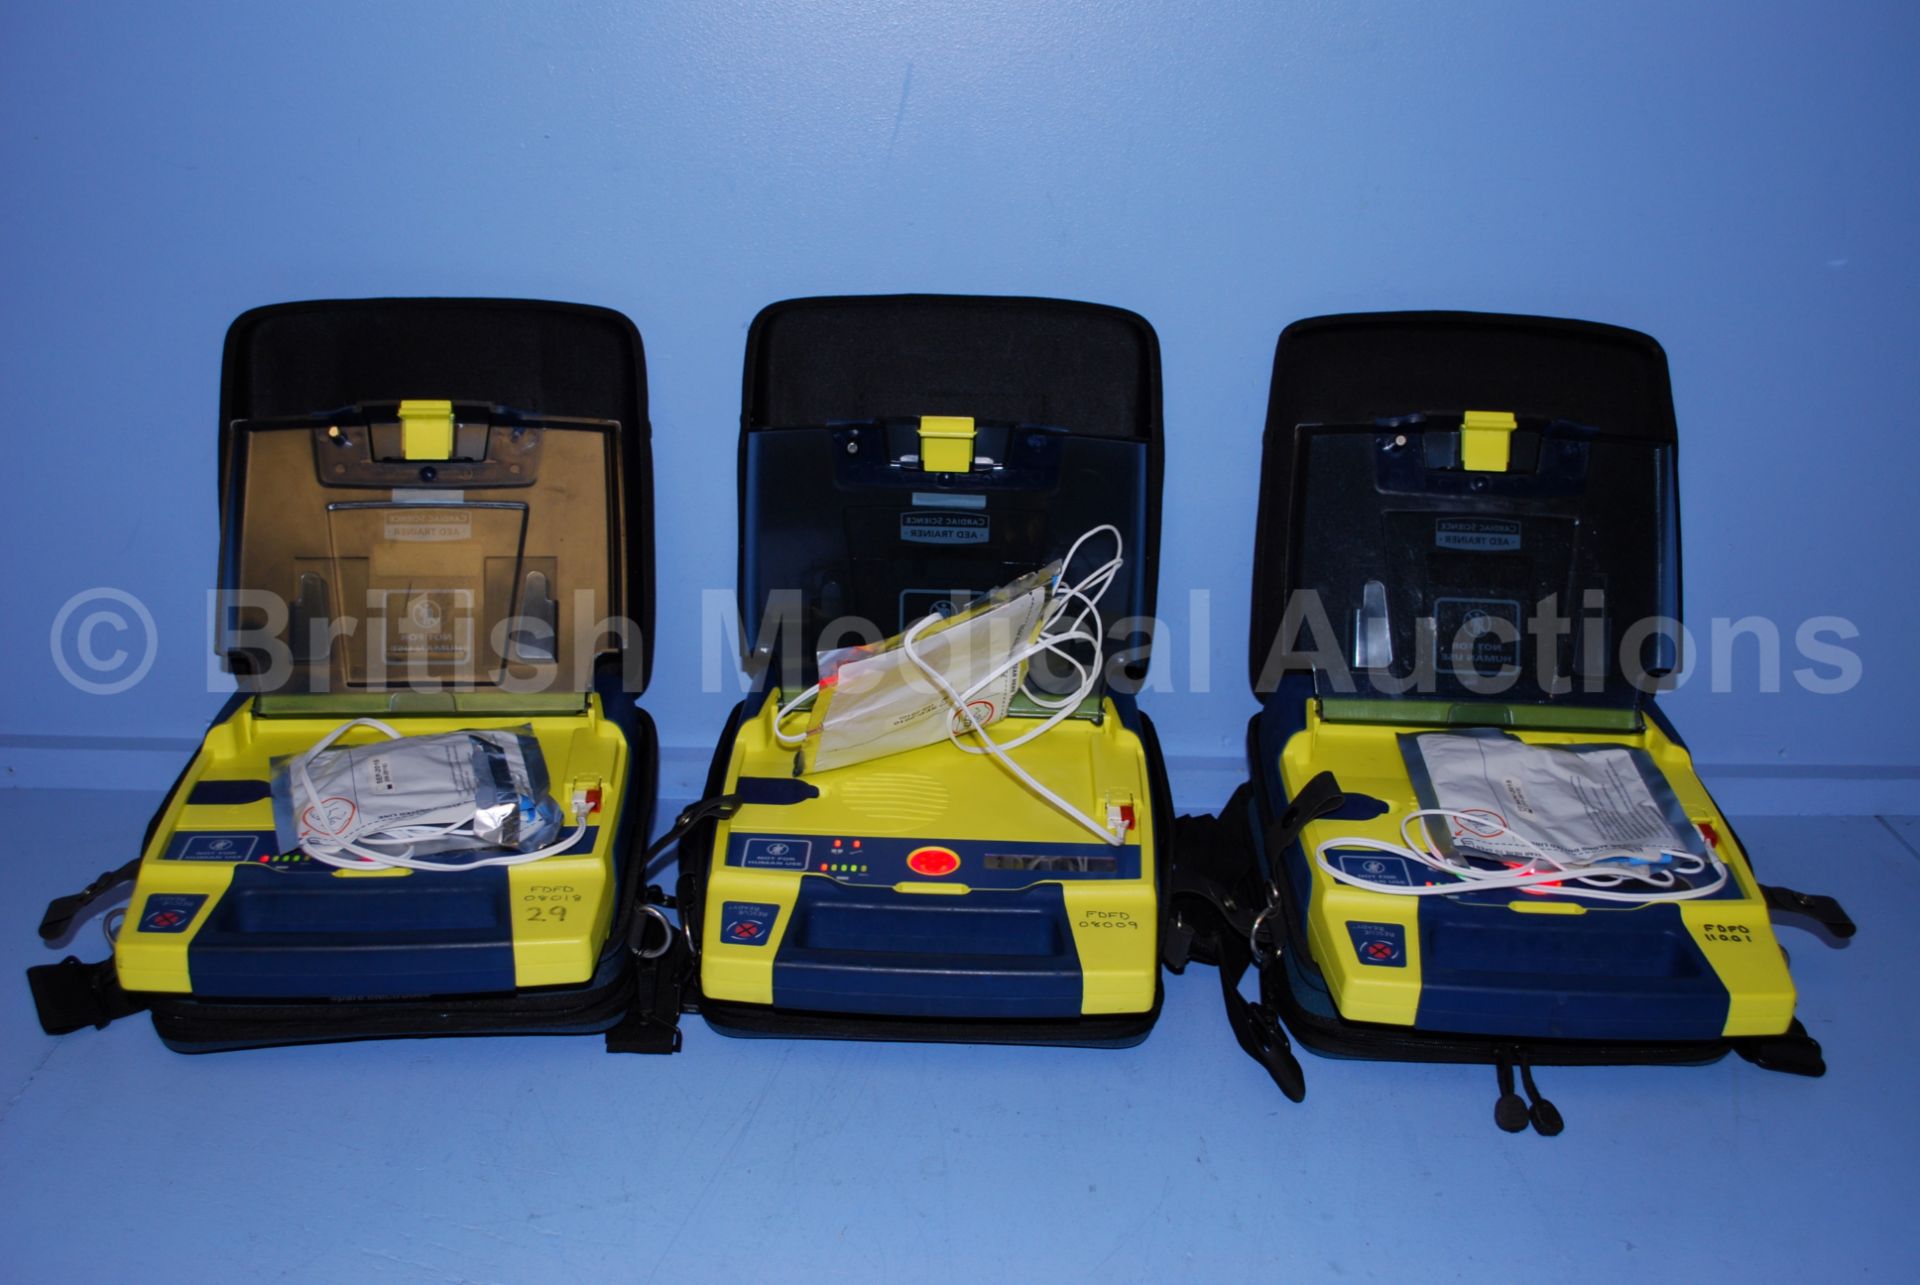 3 x Cardiac Science AED Trainer Defibrillators wit